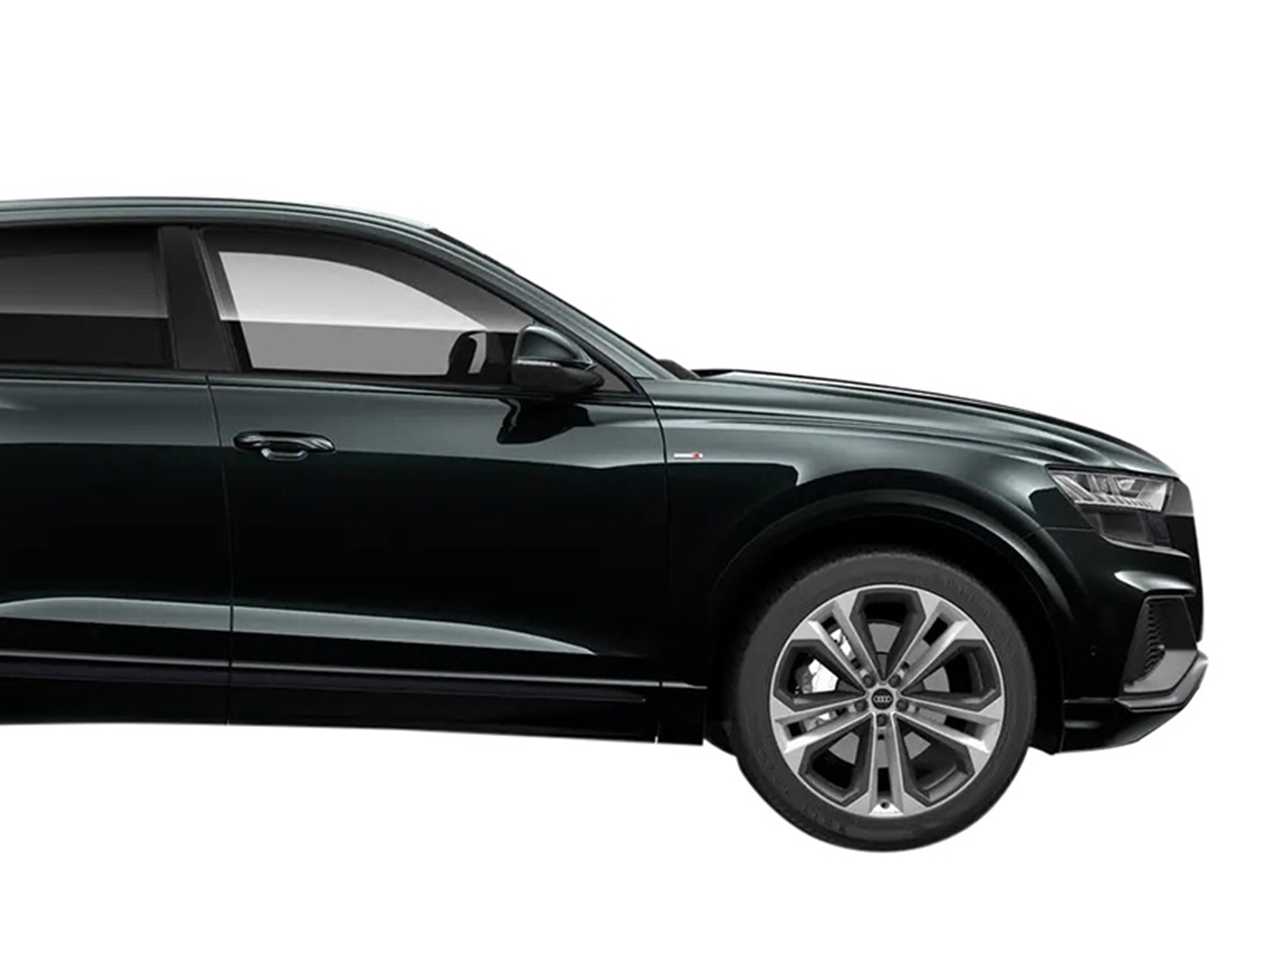 Audi Q8 - Black Edition car for hire